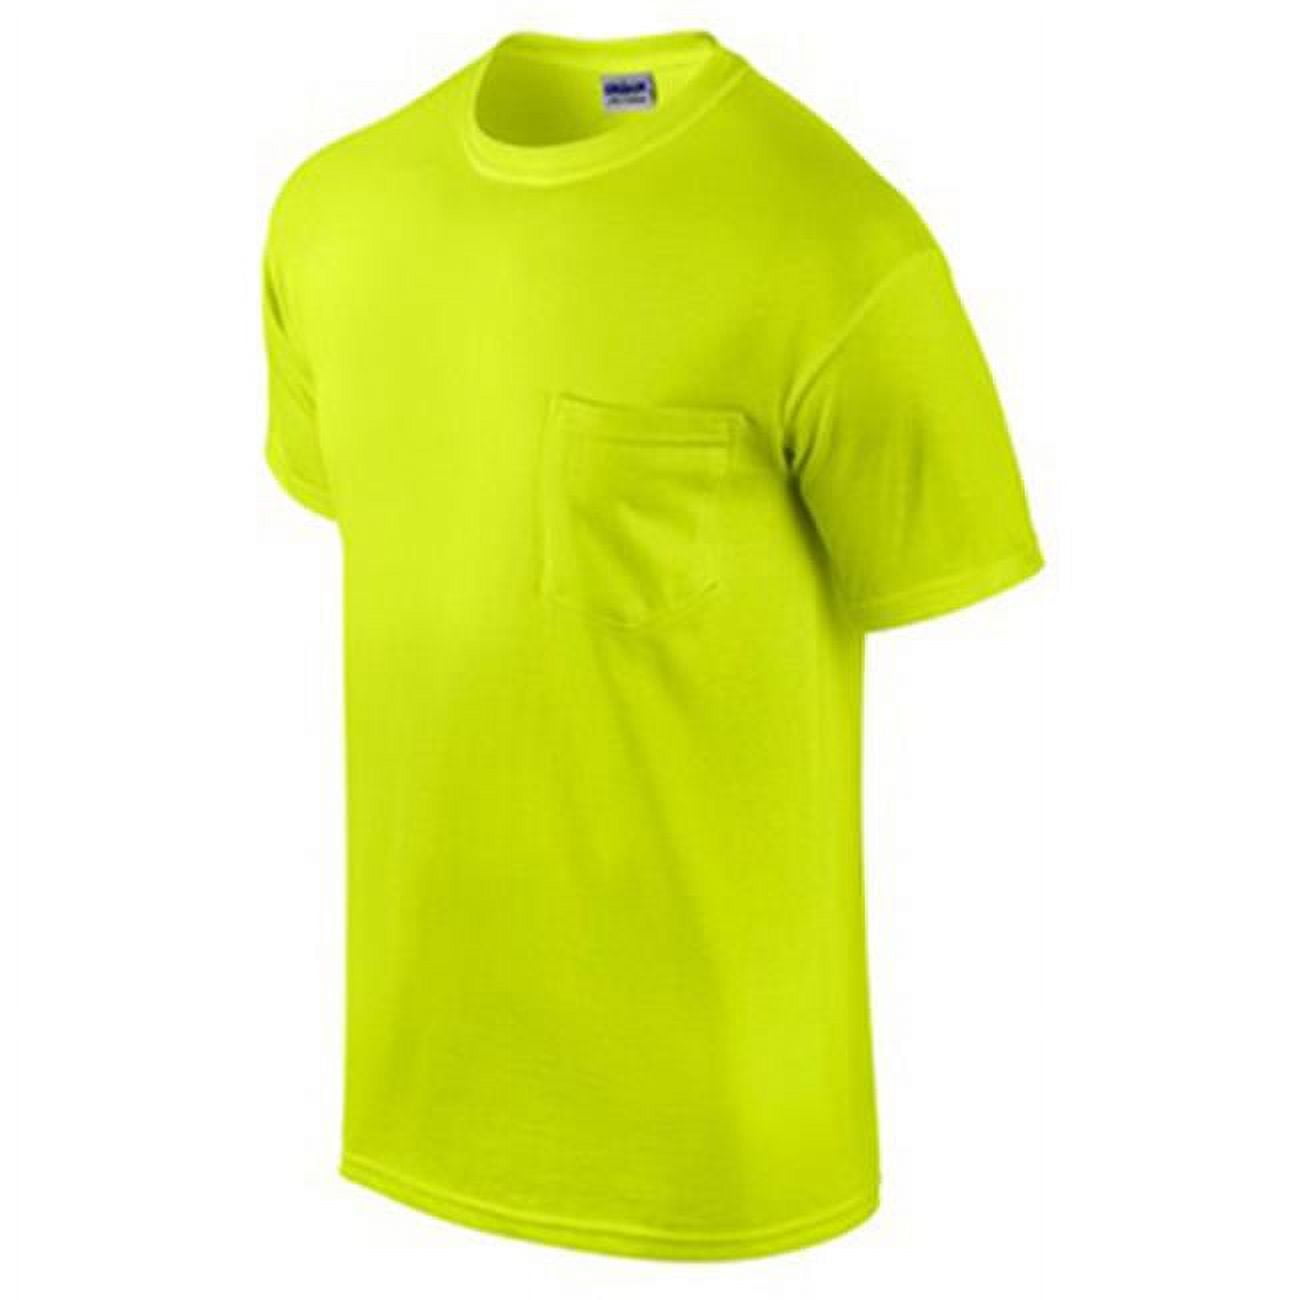 G2300GRN-M Short Sleeve Pocket Tee Shirt, Green - Medium, Pack Of 2 ...